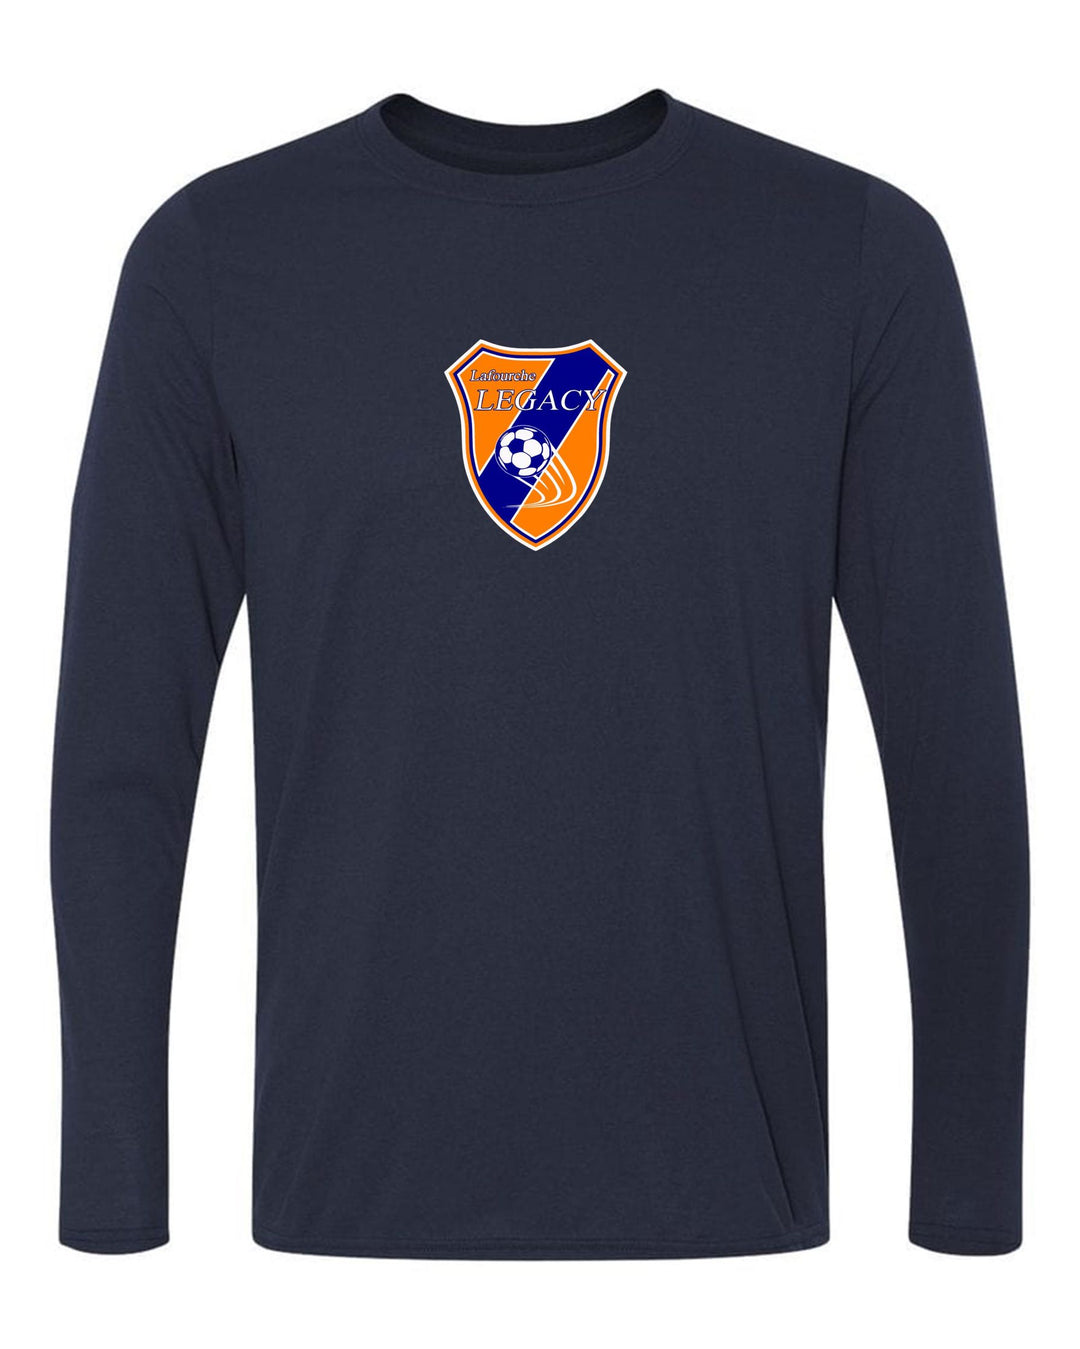 Lefourche Legacy Long-sleeve T-shirt - Navy or Orange  MENS MEDIUM NAVY - Third Coast Soccer